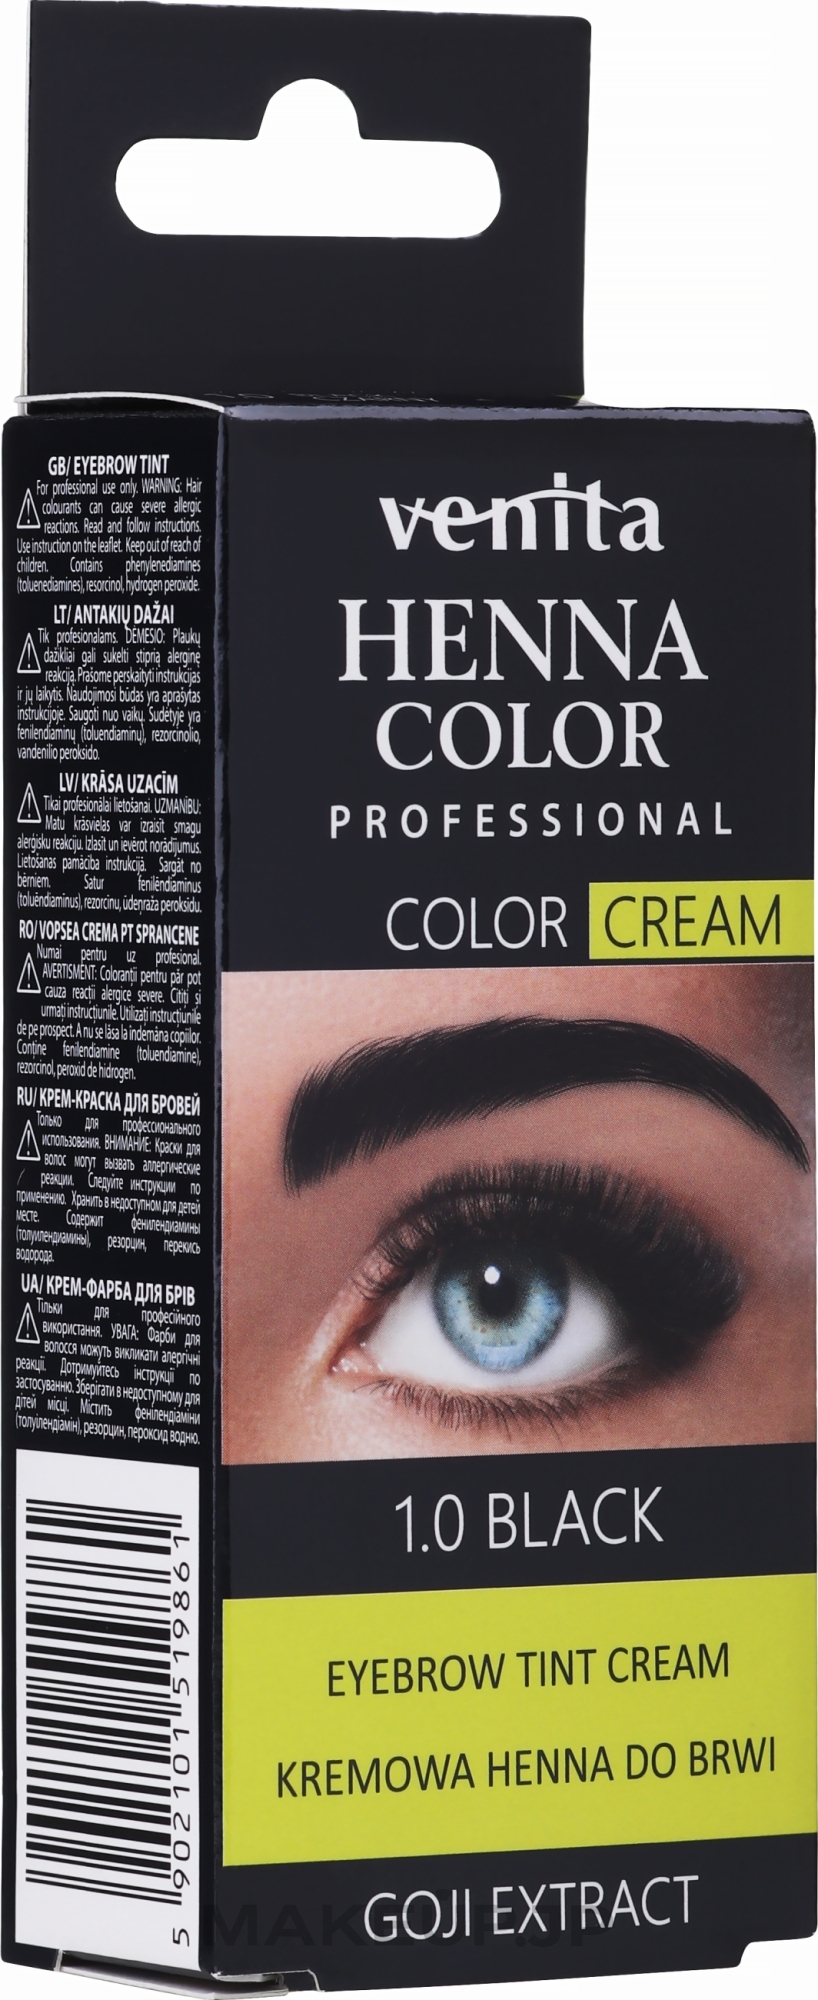 Brow Henna Cream Color - Venita Professional Henna Color Cream Eyebrow Tint Cream — photo 1.0 - Black